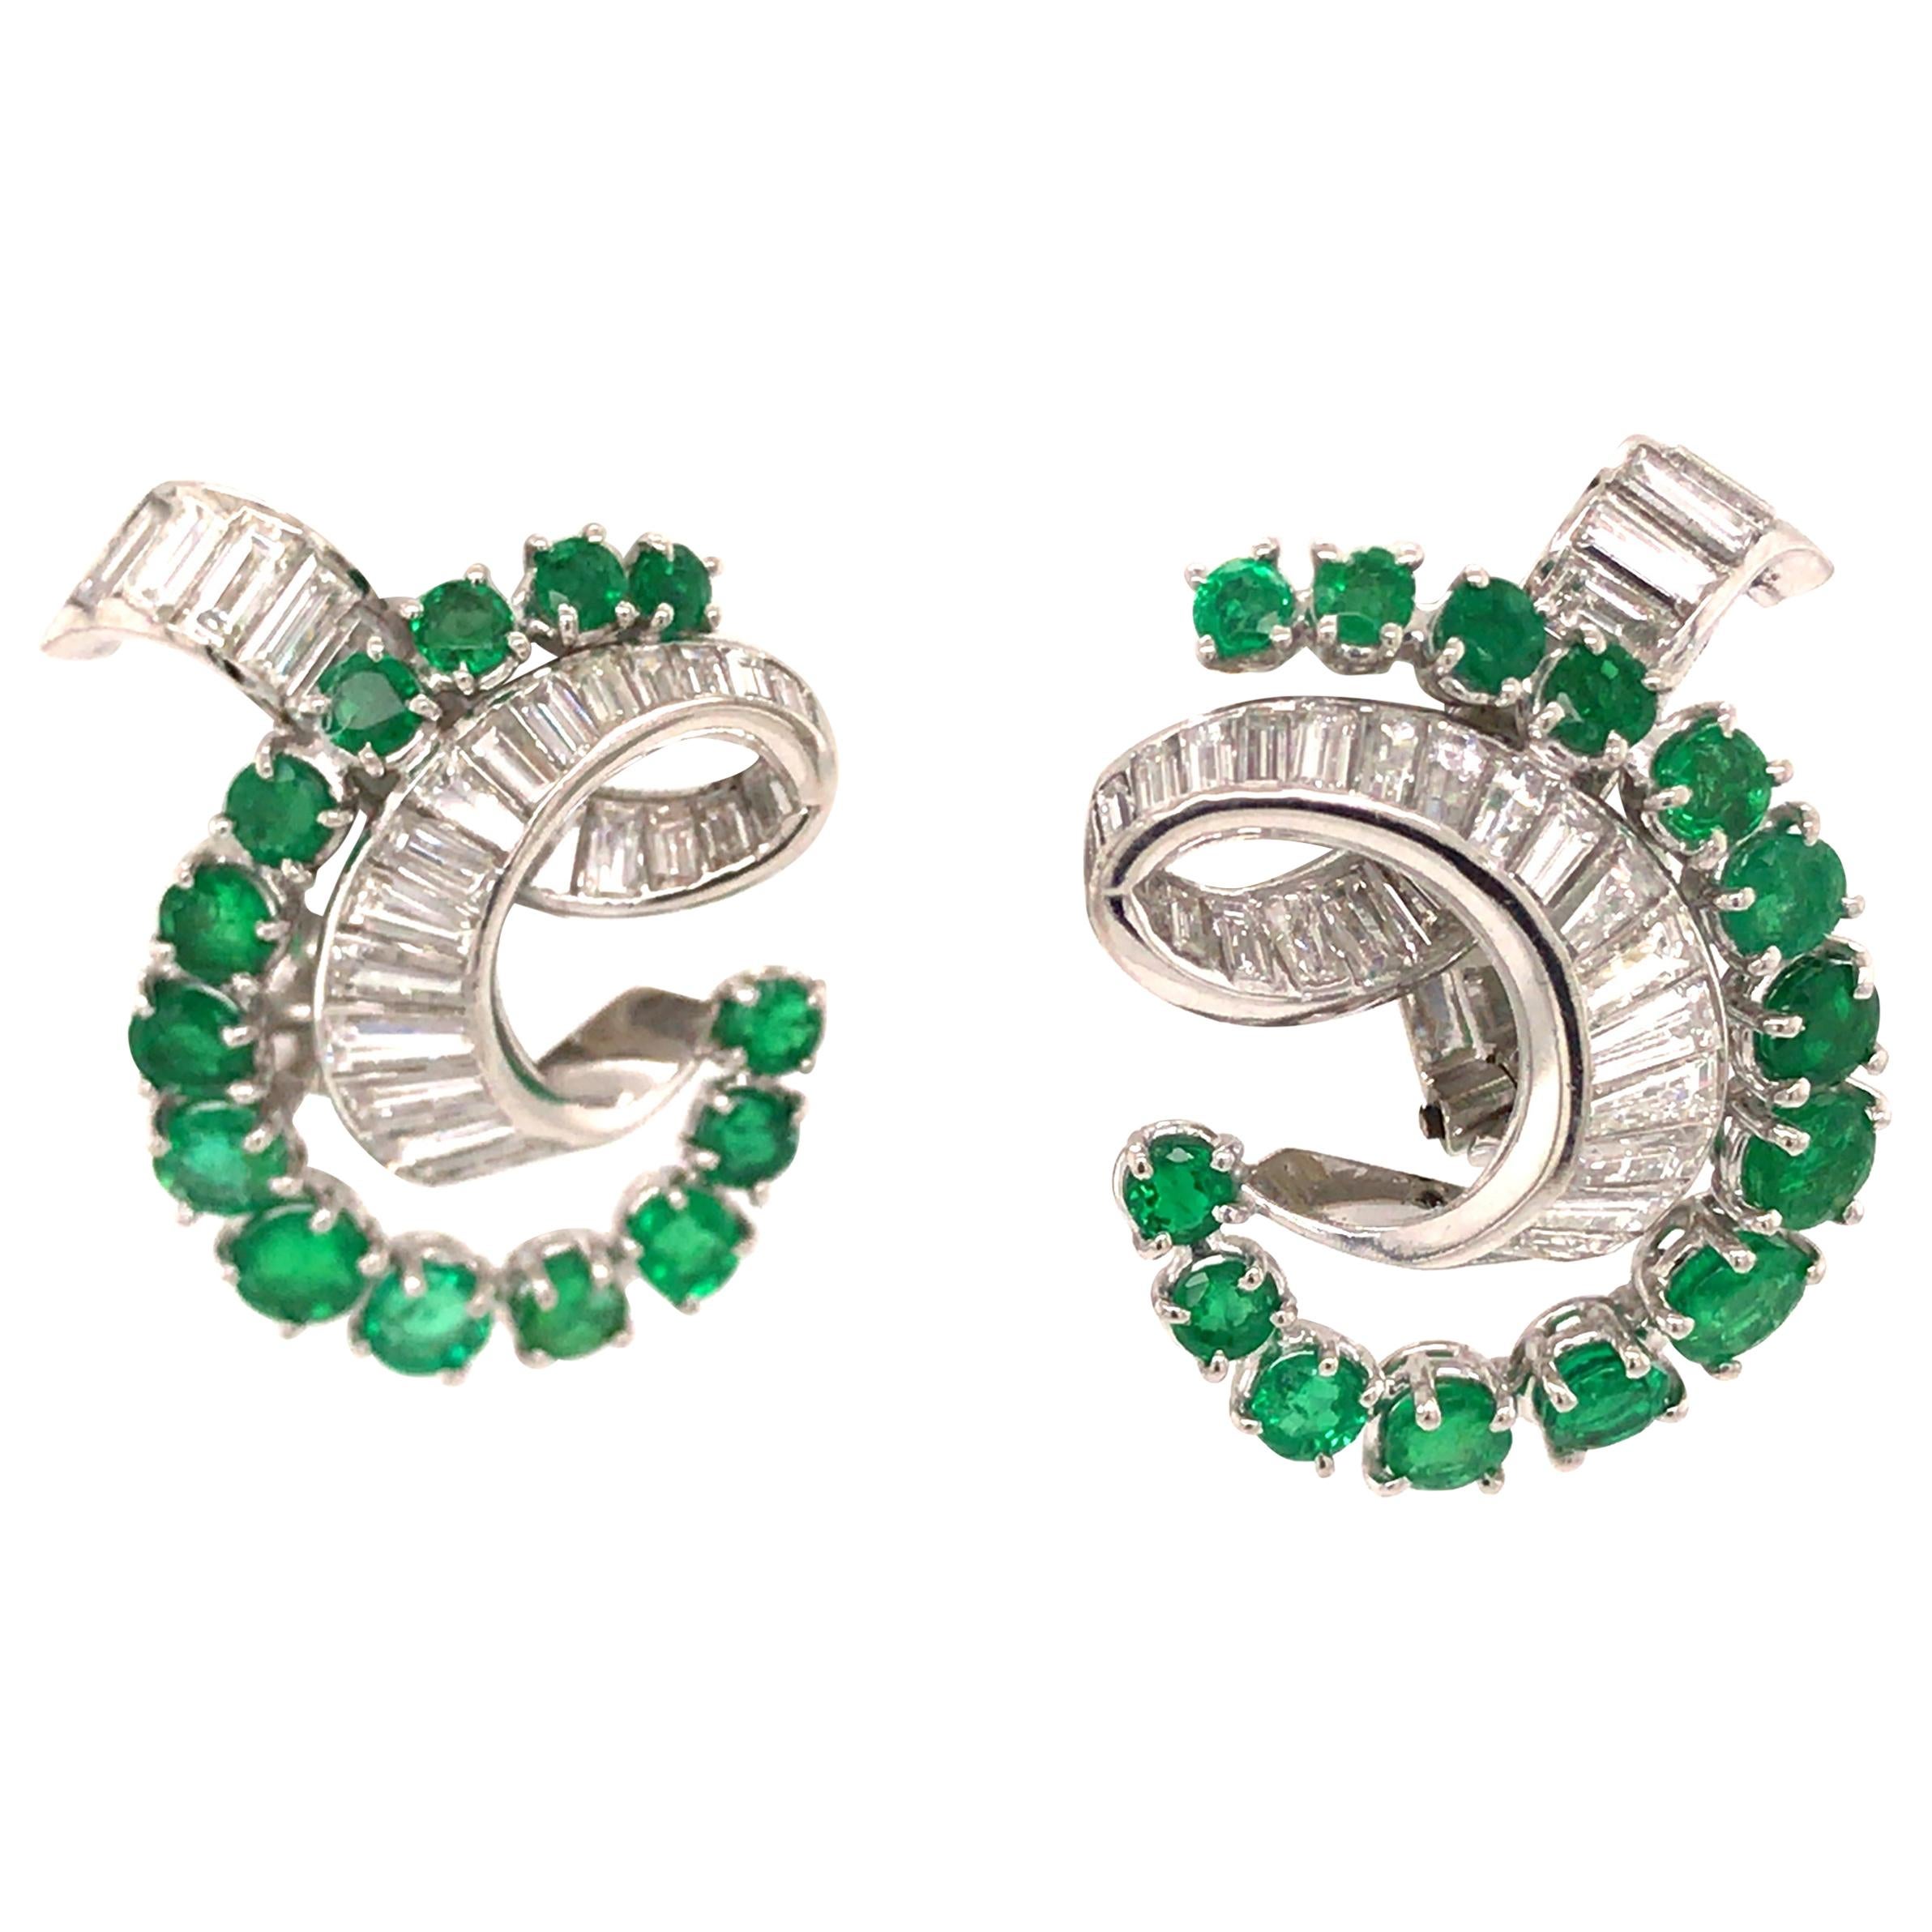 Platinum Art Deco Style Diamond and Emerald Earrings